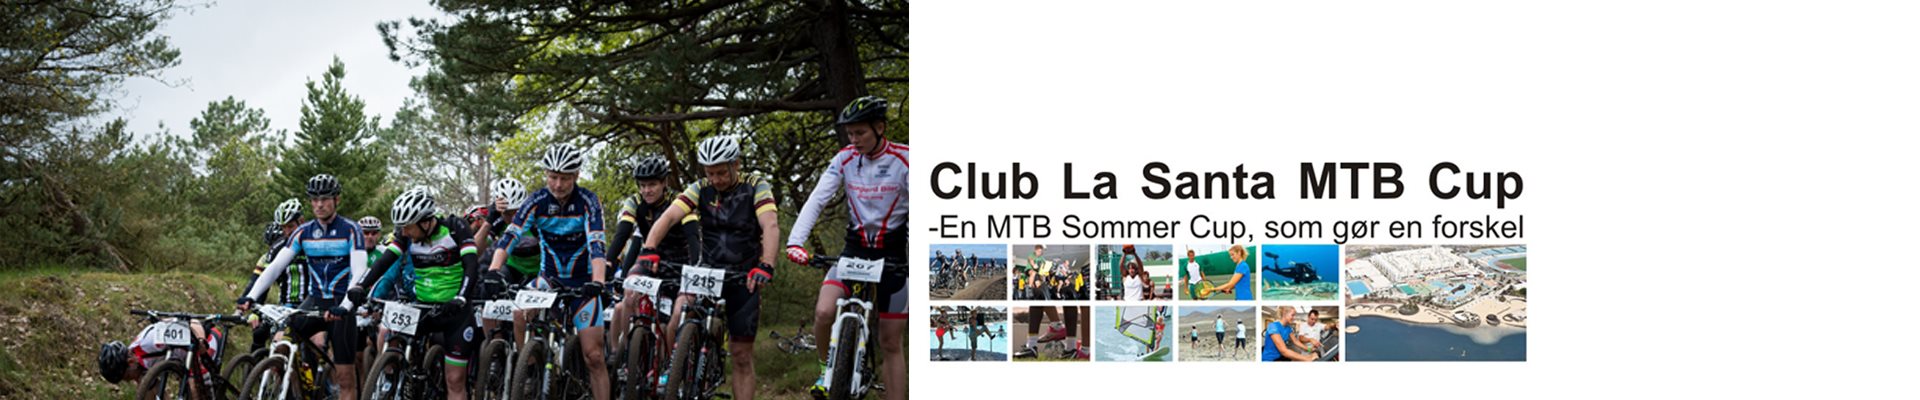 CLUB LA SANTA MTB CUP '20 - #2 Tjæreborg MTB Track